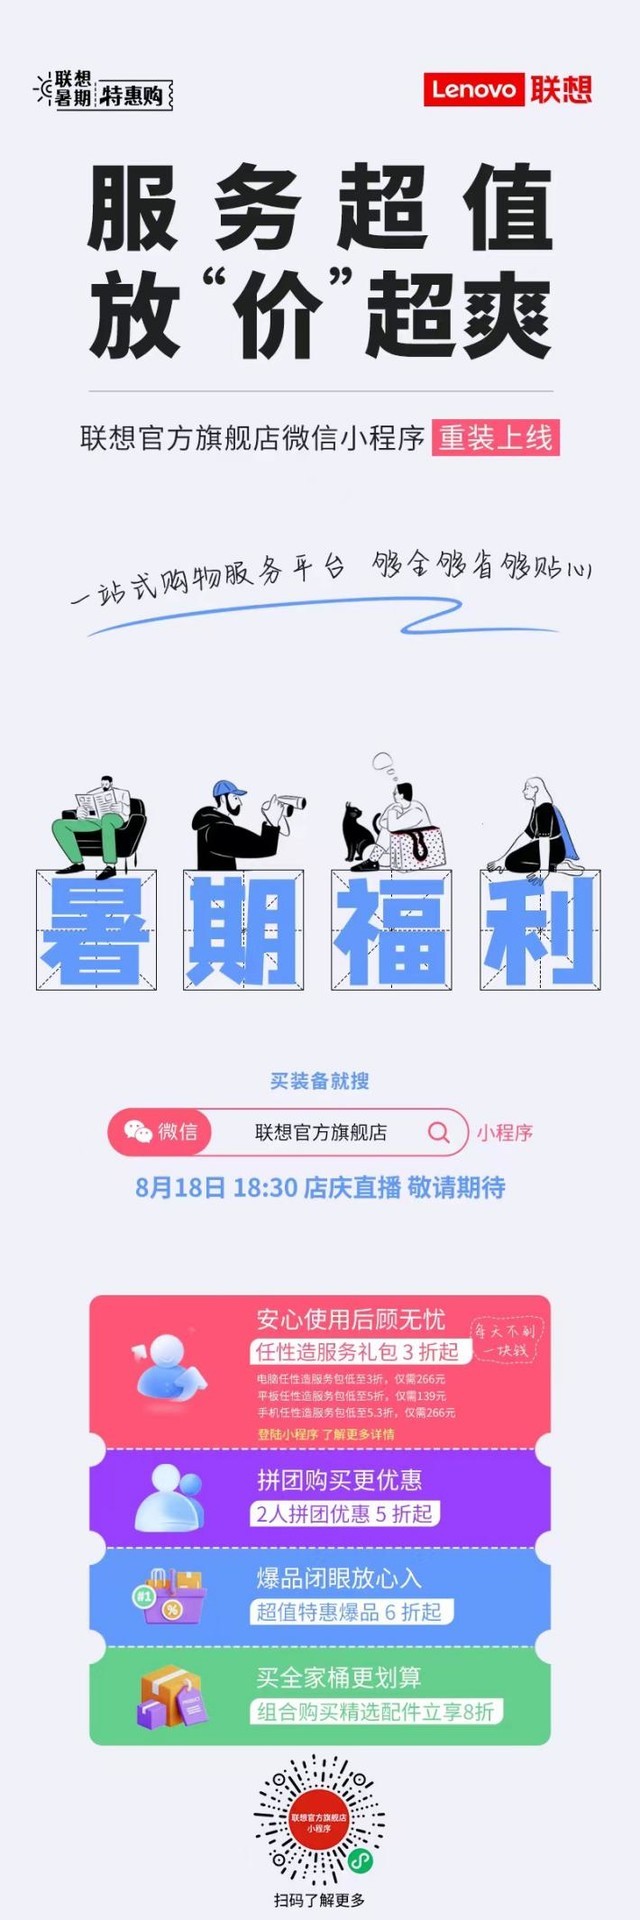  Live broadcast welfare | Lenovo Goodwill Recommender Li Xueqin Live broadcast surprise welfare! Send! Send!